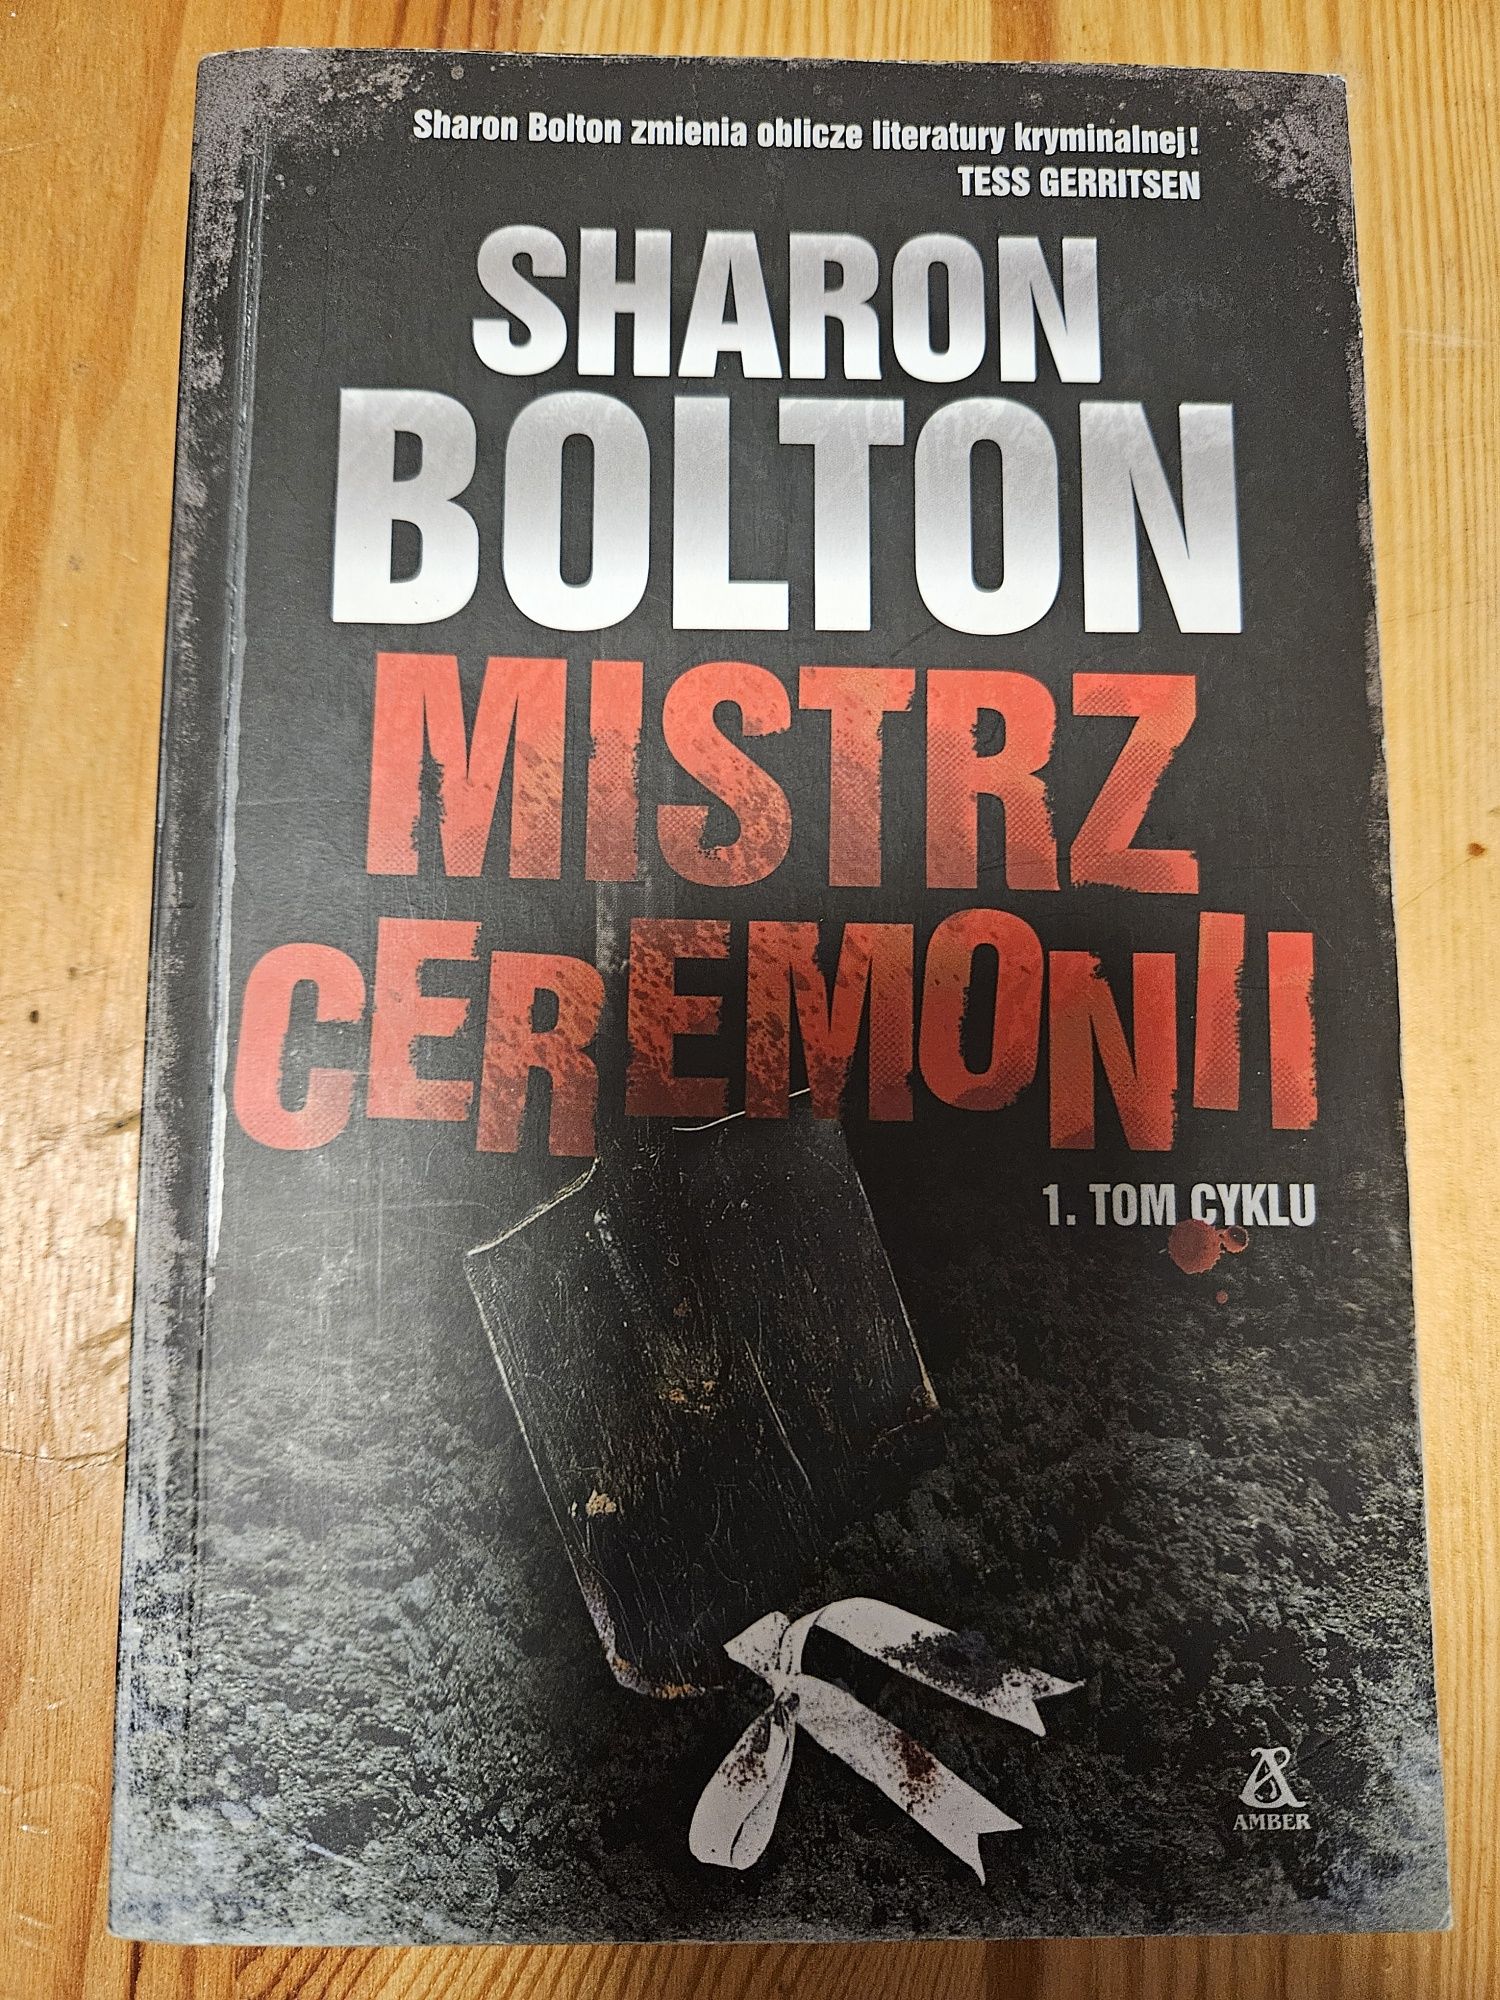 Mistrz ceremonii, Sharon Bolton